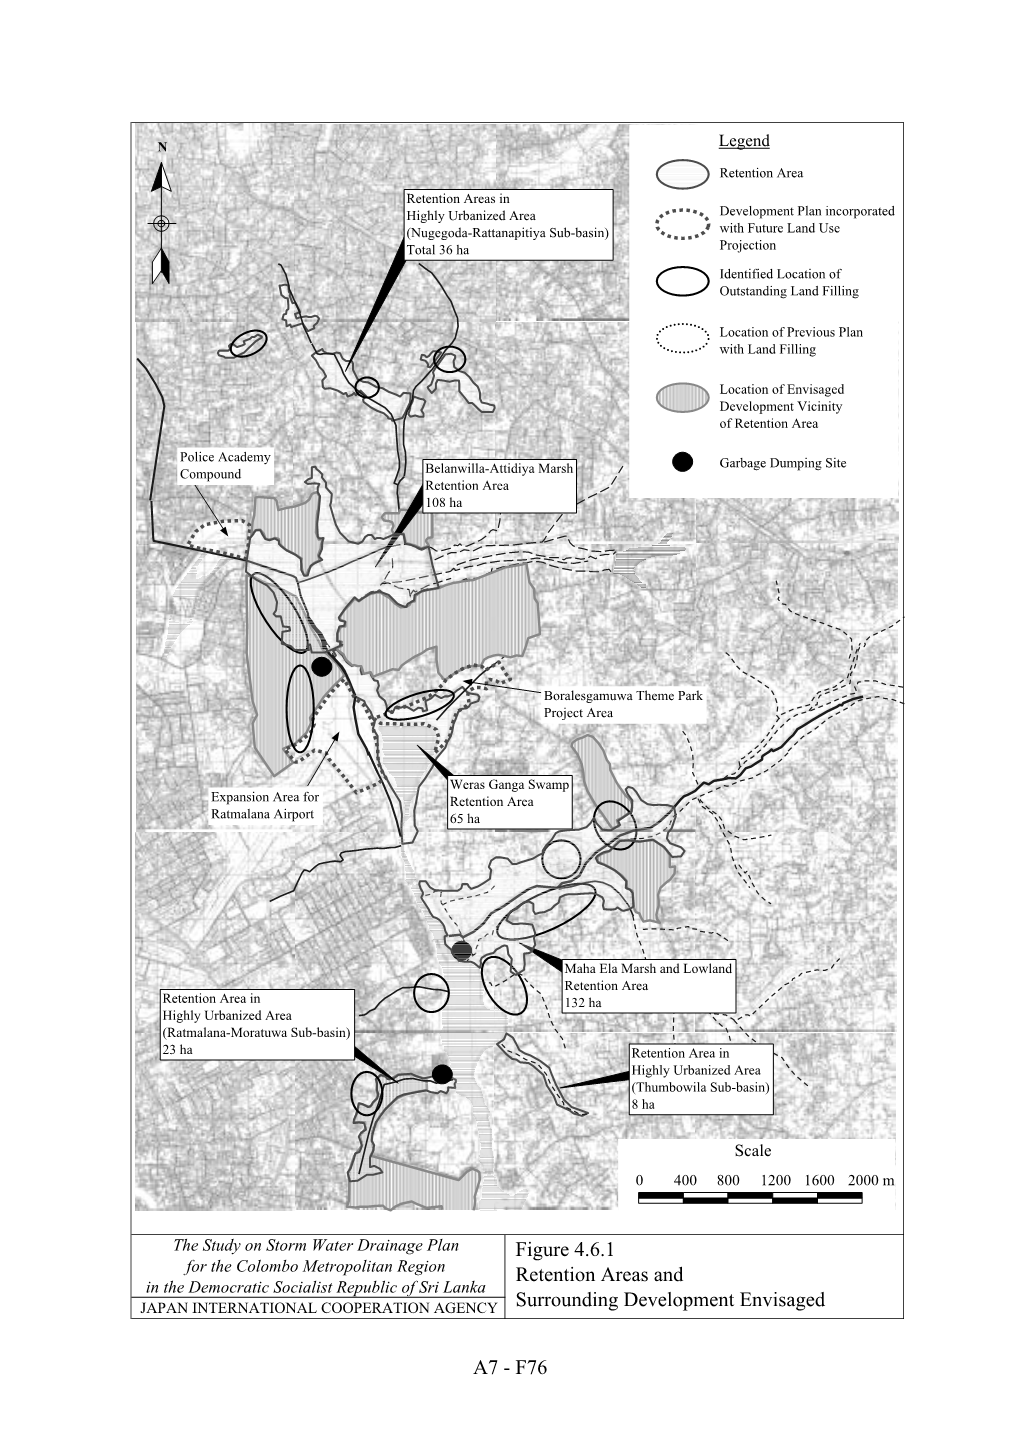 Figure 4.6.1 Retention Areas and Surrounding Development